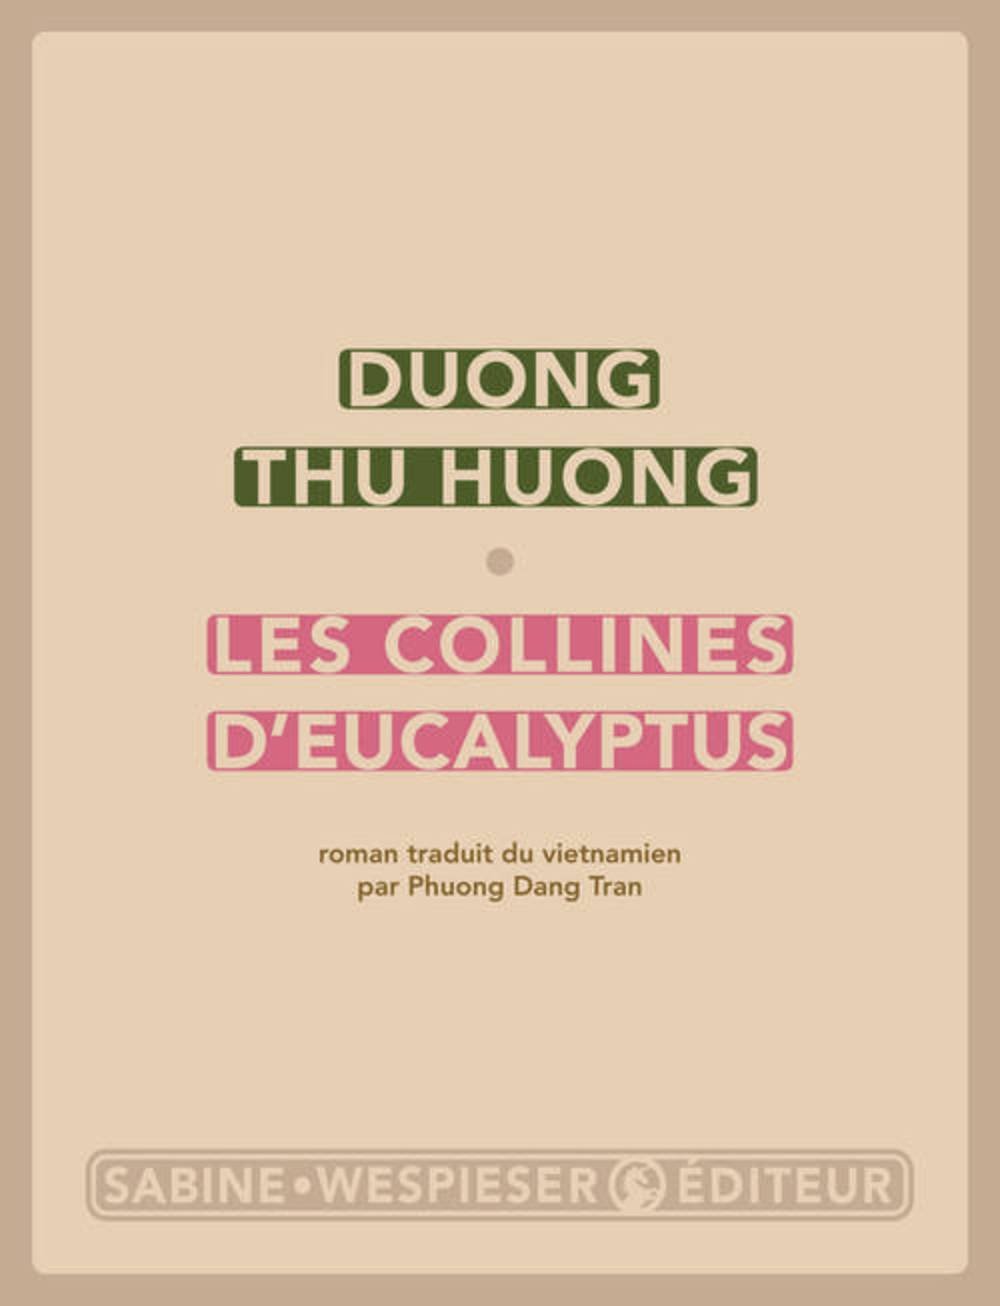 Duong Thu Huong les collines d'eucalyptus éditions Sabine Wespieser heteroclite juin 2014